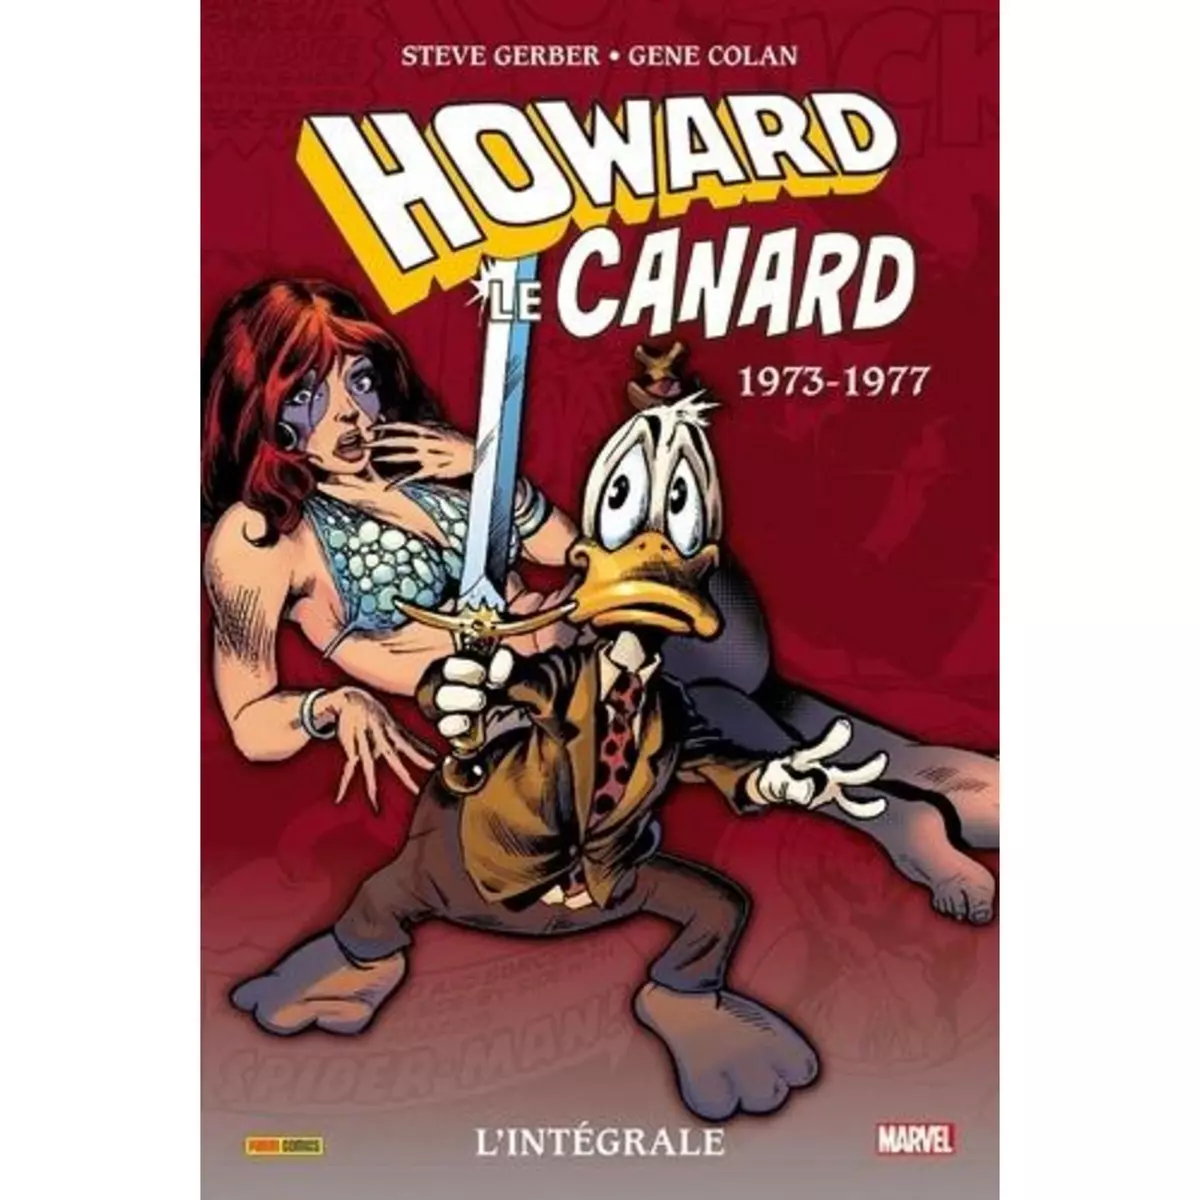  HOWARD LE CANARD L'INTEGRALE : 1973-1977, Gerber Steve